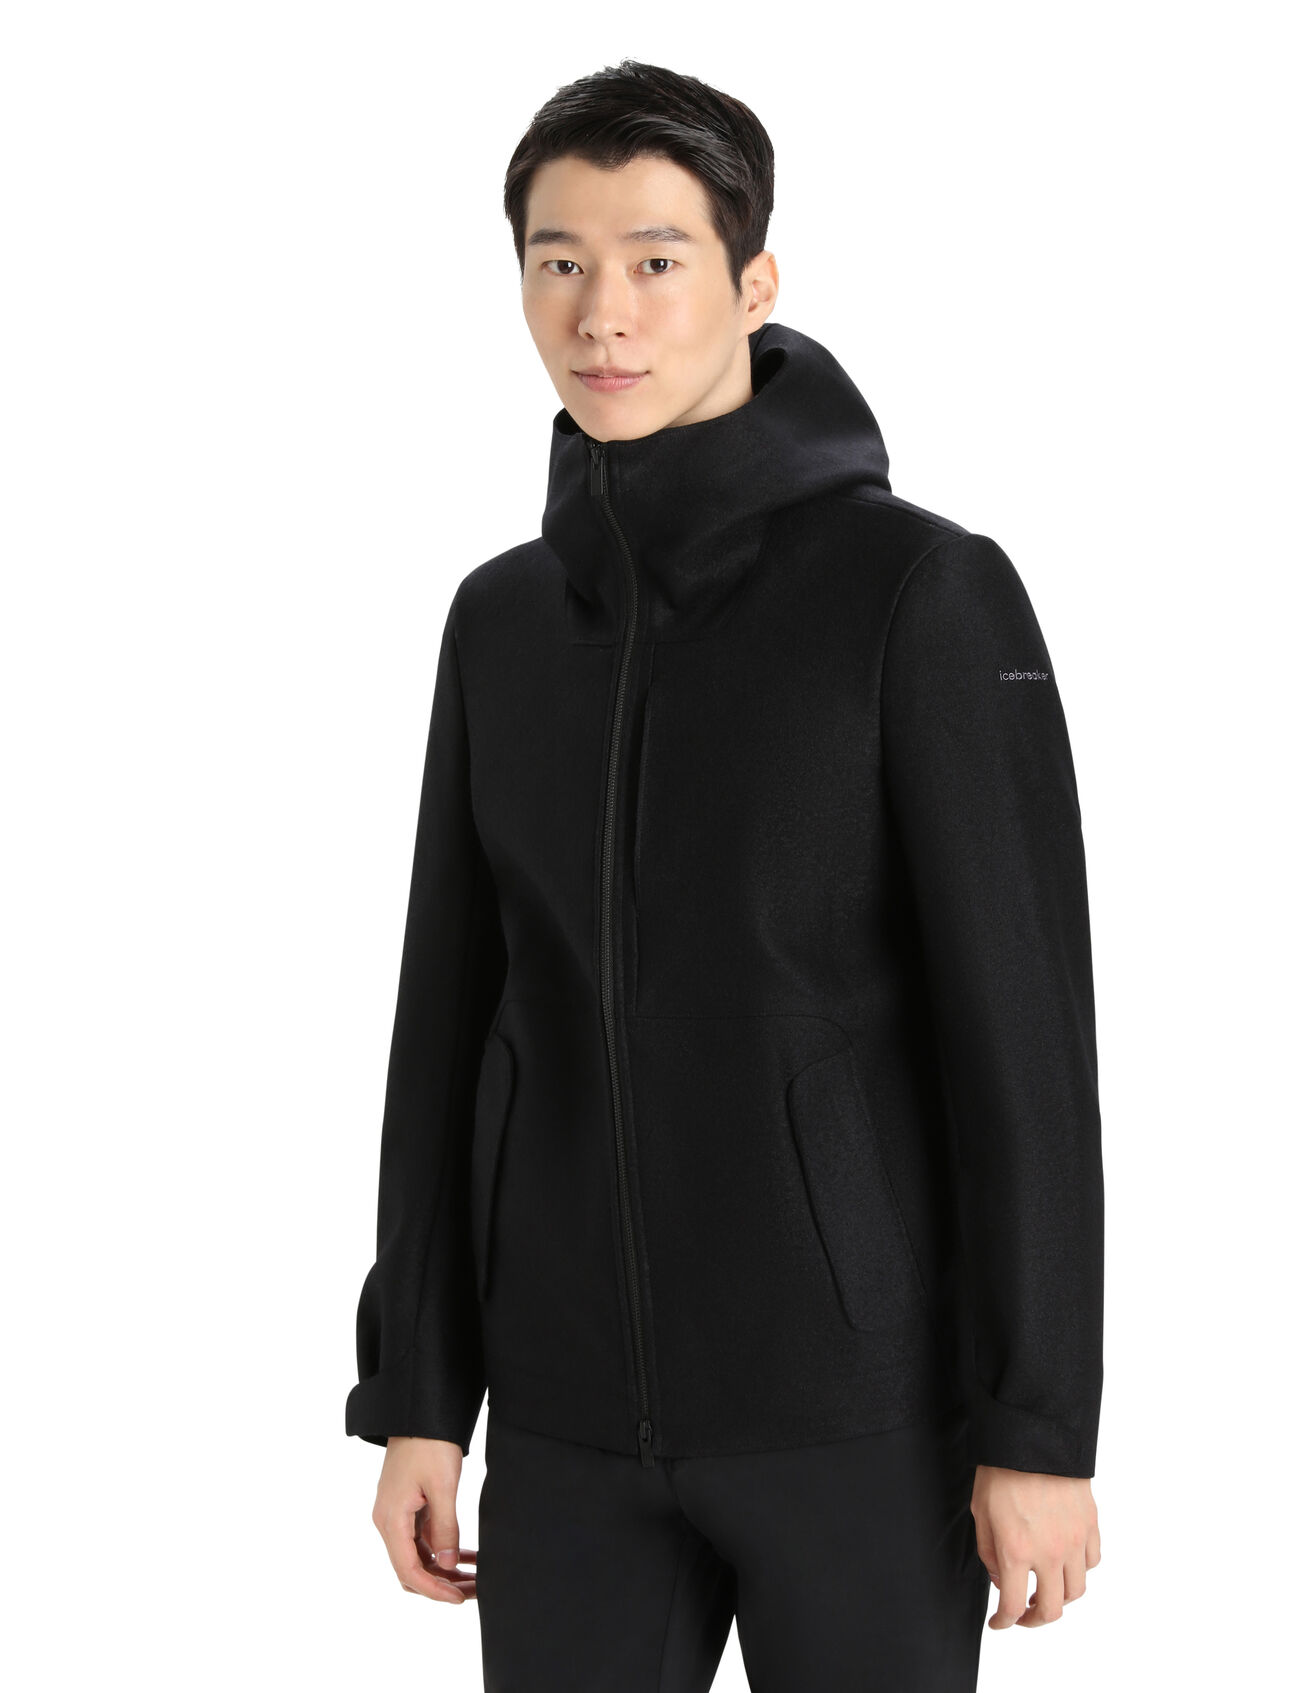 icebreaker.com | Men's Felted Hooded Jacket in Merino Wool